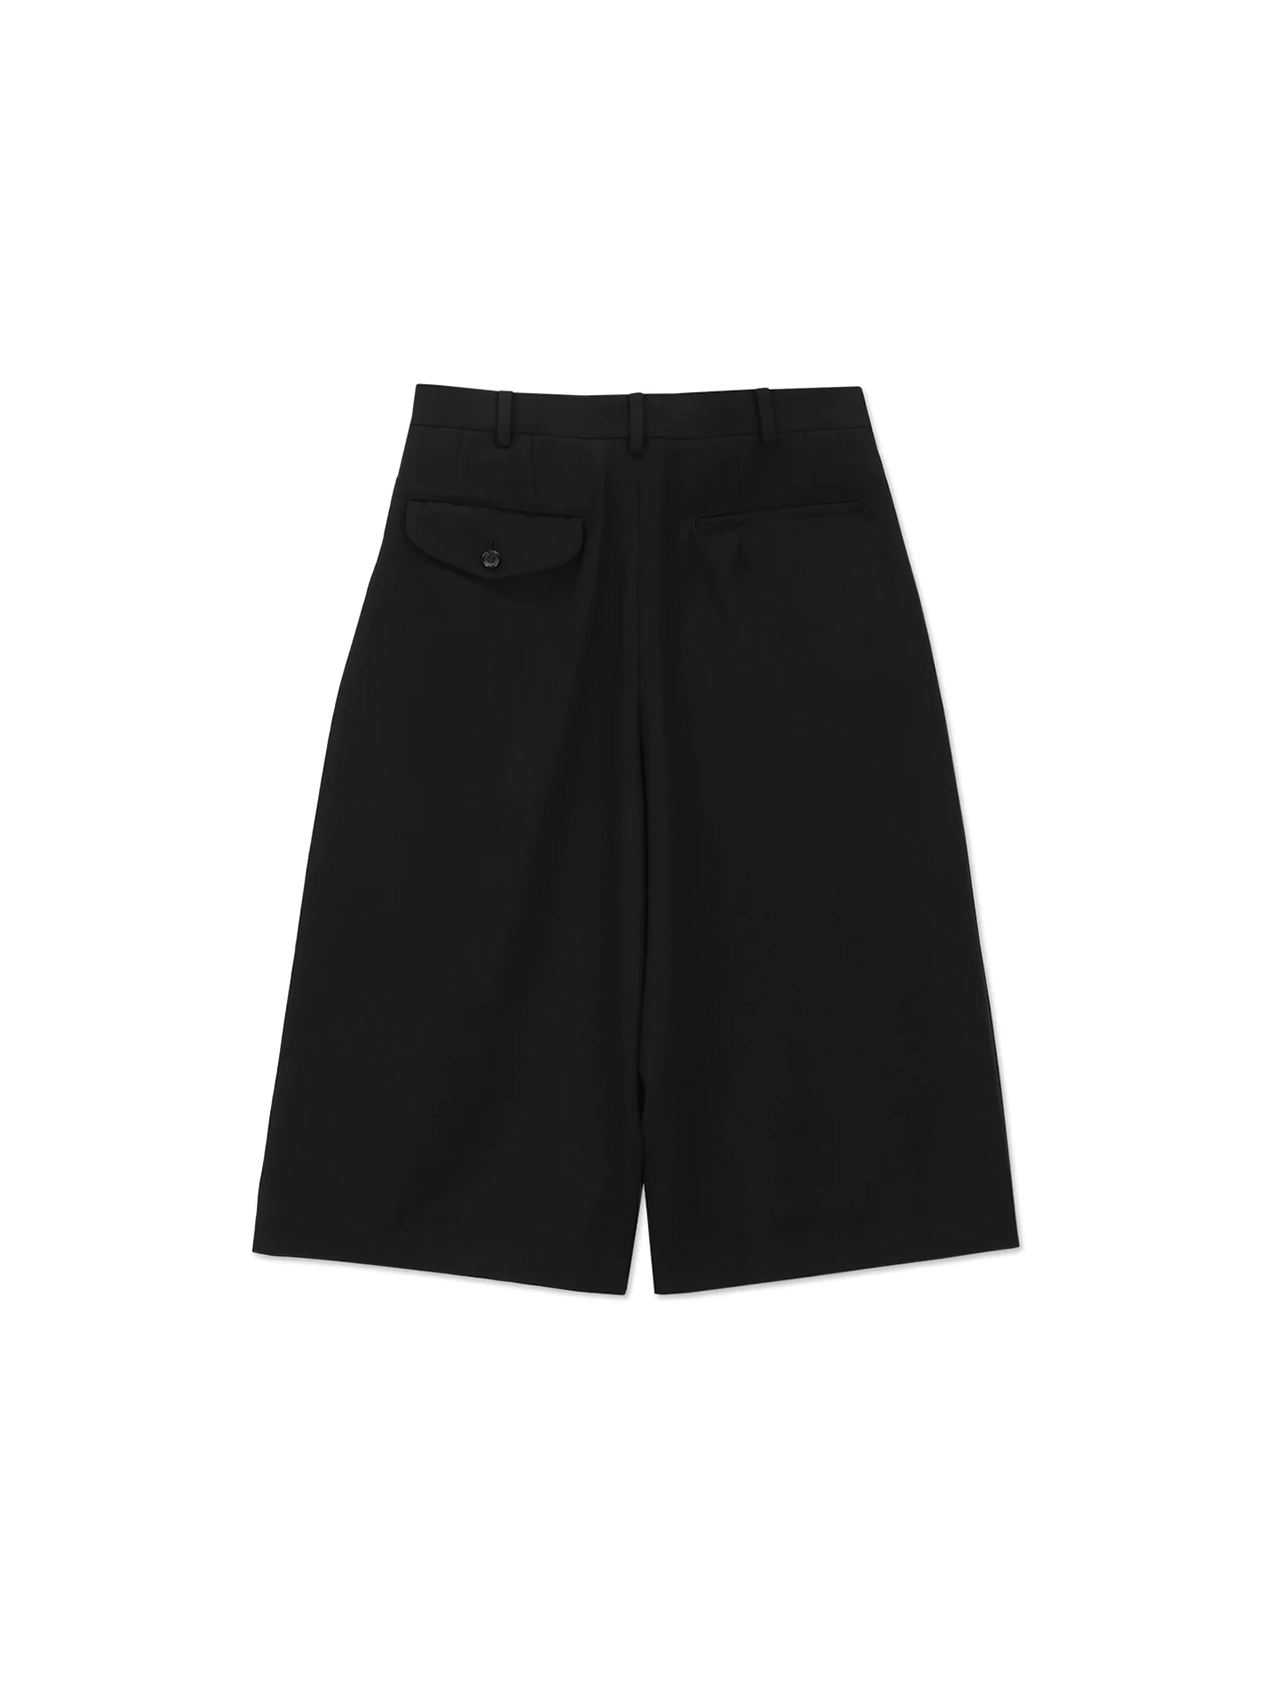 CDG CDG Black Pleated Skirt Front Pants